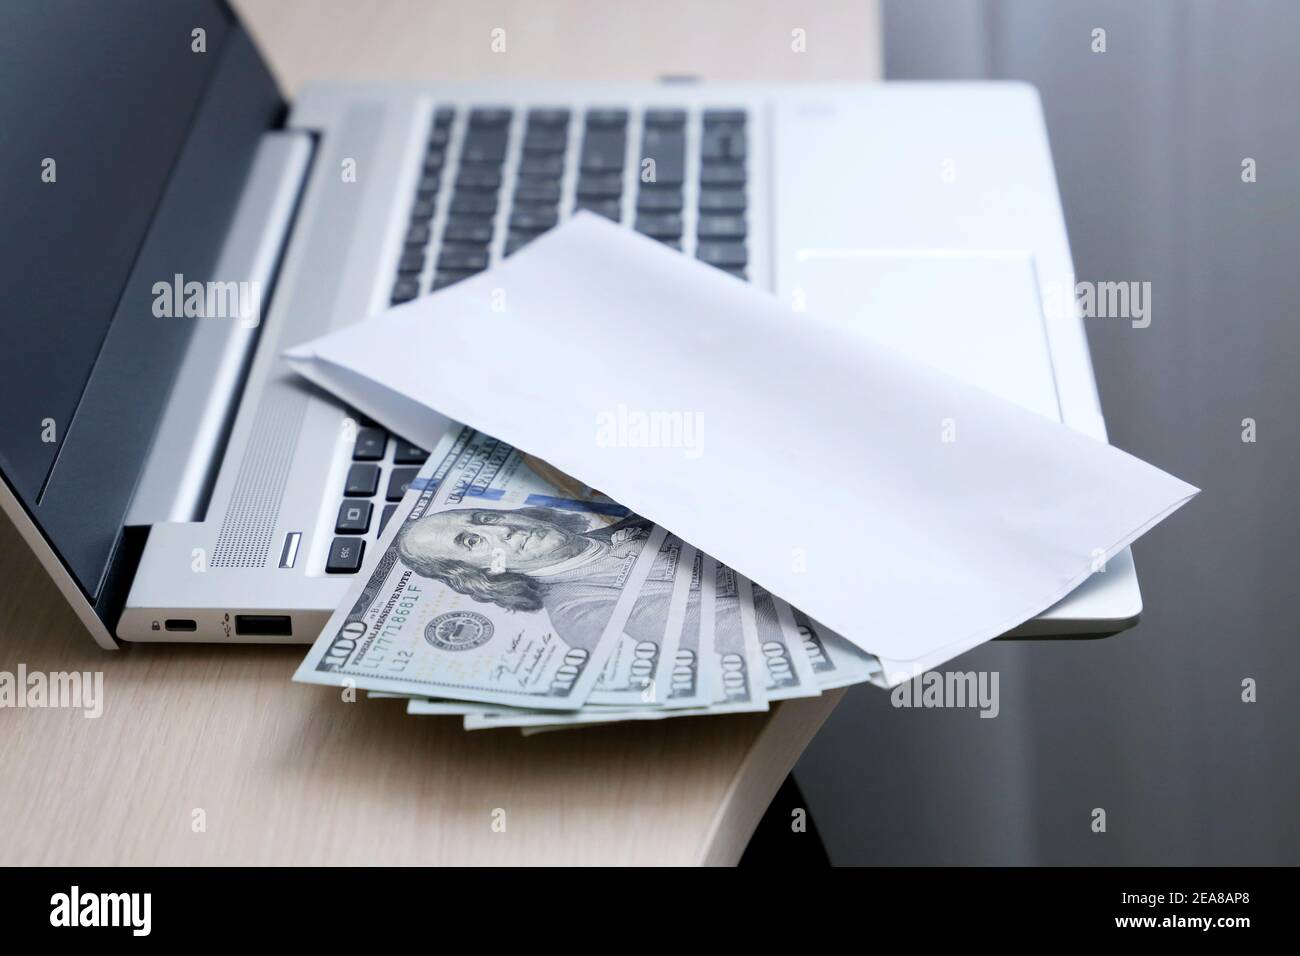 Envelope with US dollars on laptop keyboard. Wages, bonus or bribe concept Stock Photo